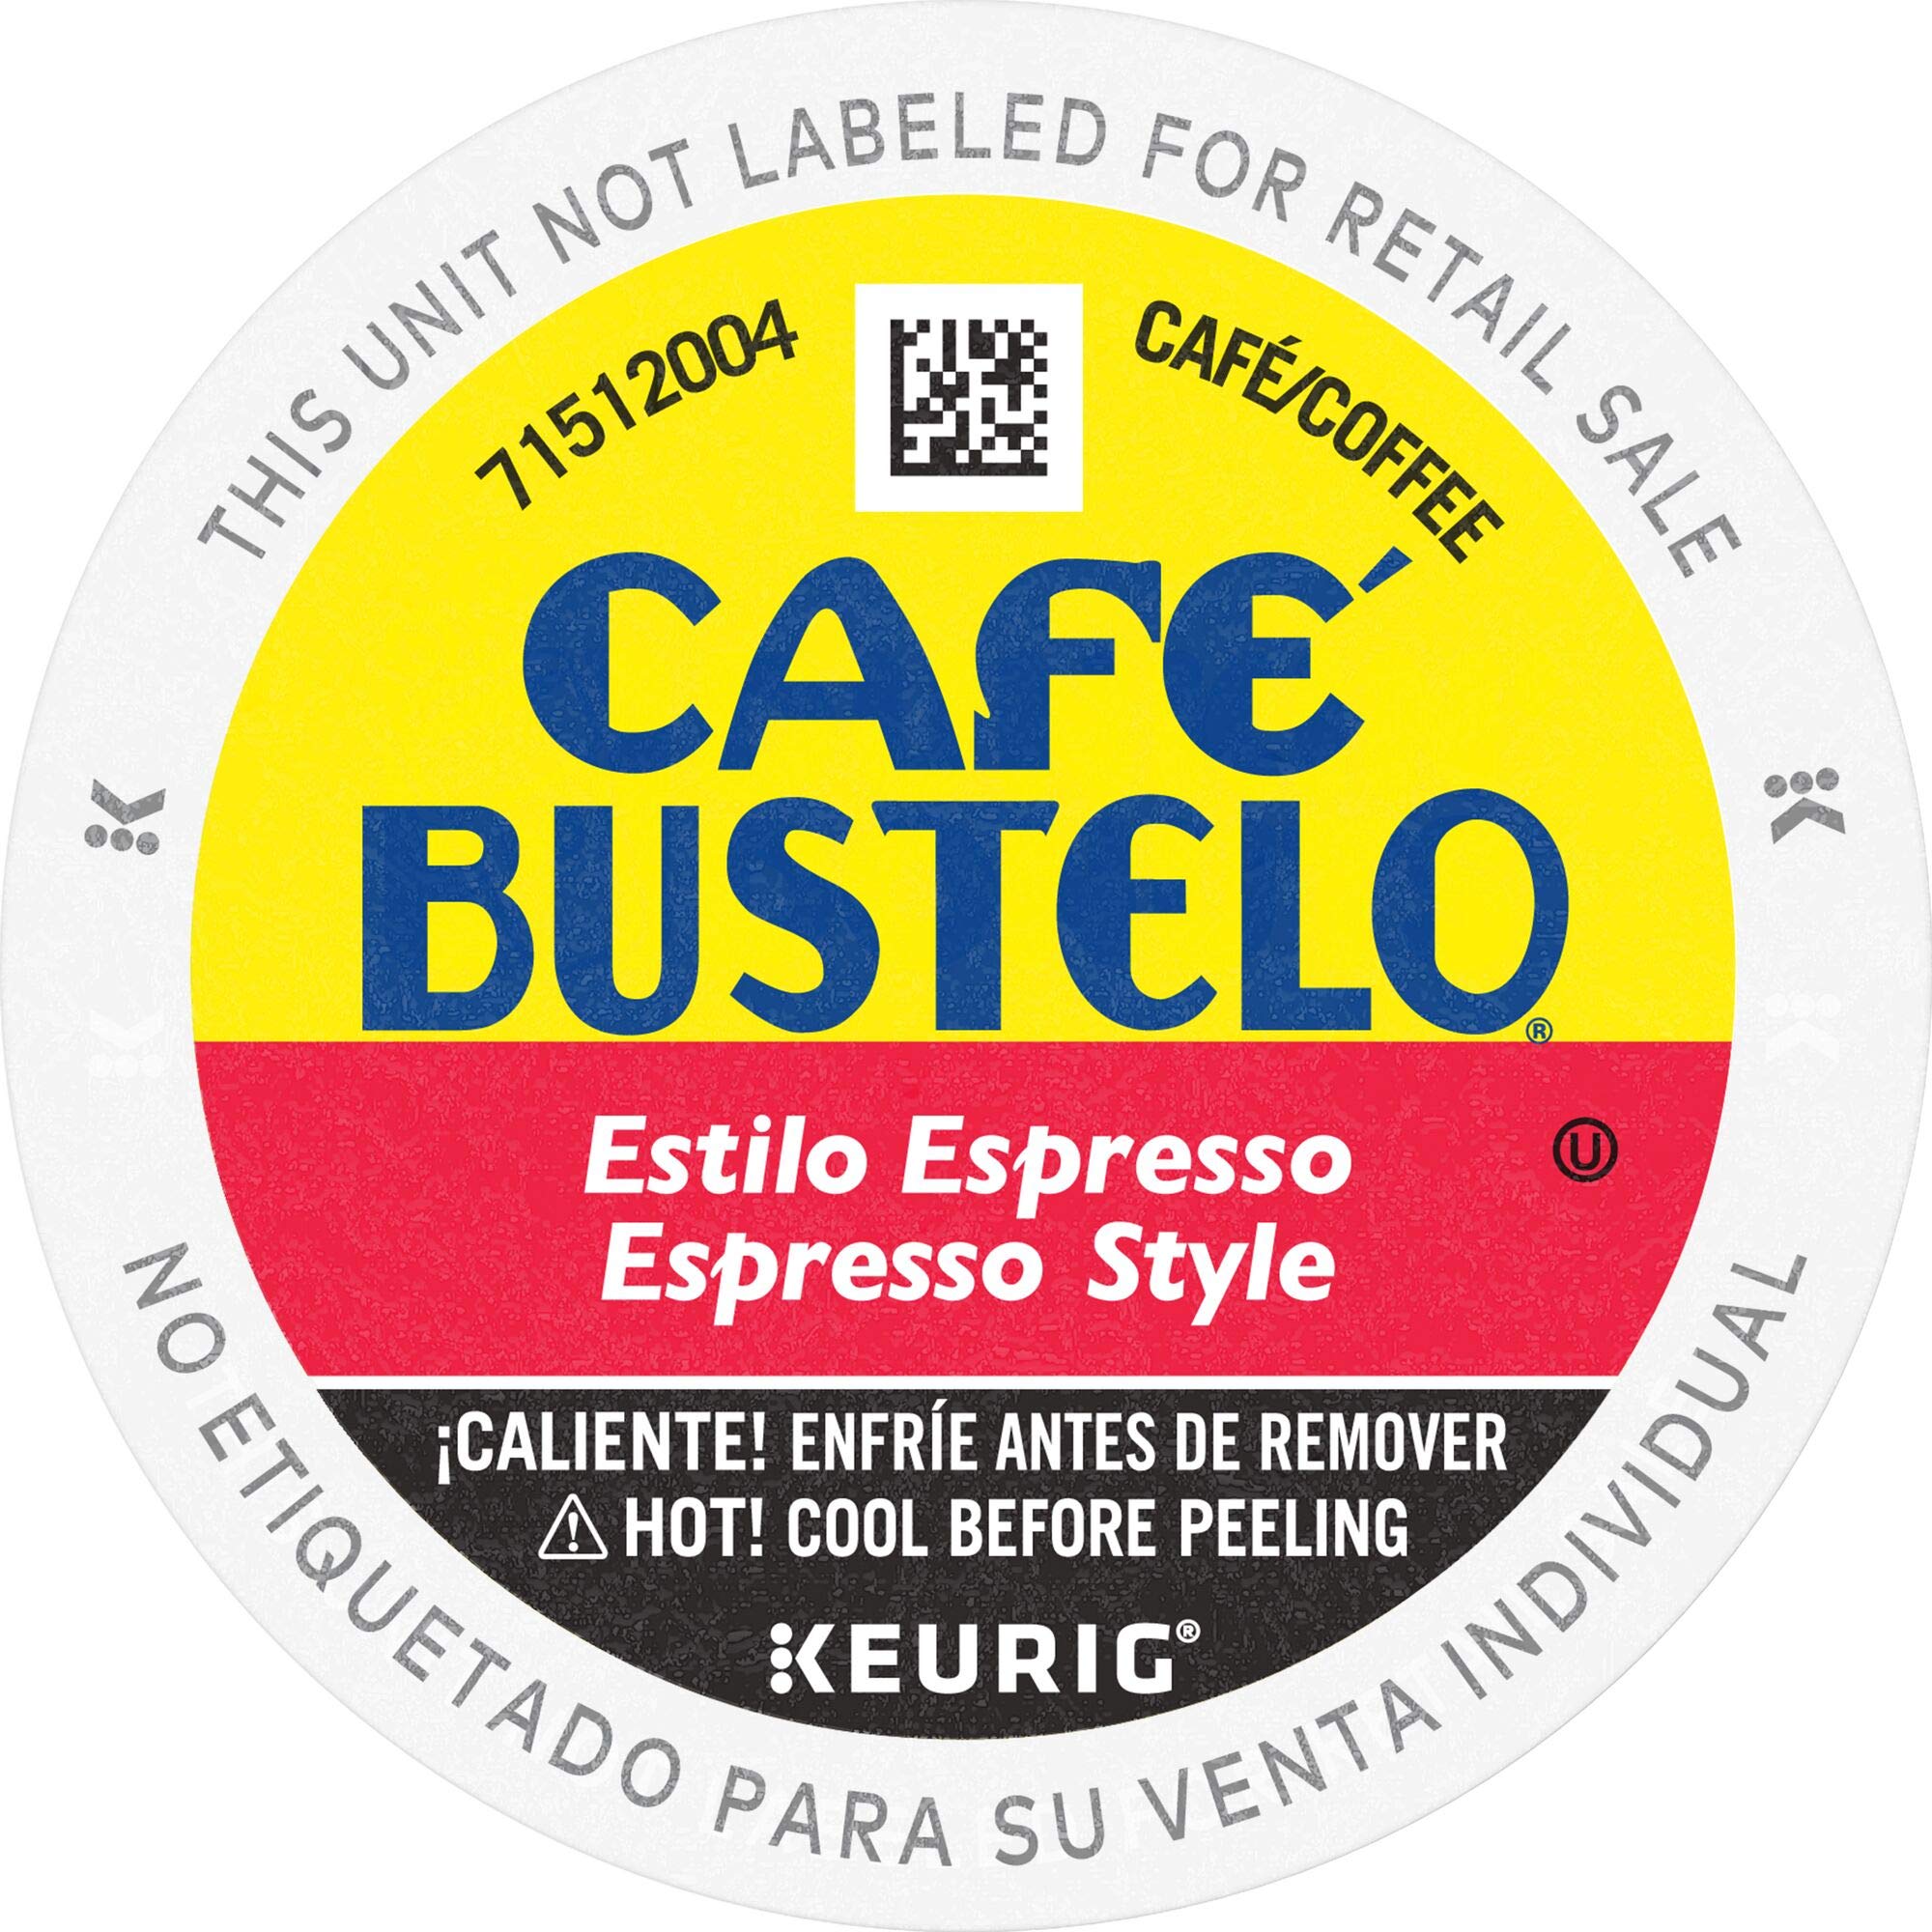 Cafe Bustelo Caf? Bustelo Espresso Style Dark Roast Coffee, 24 Keurig K-Cup Pods